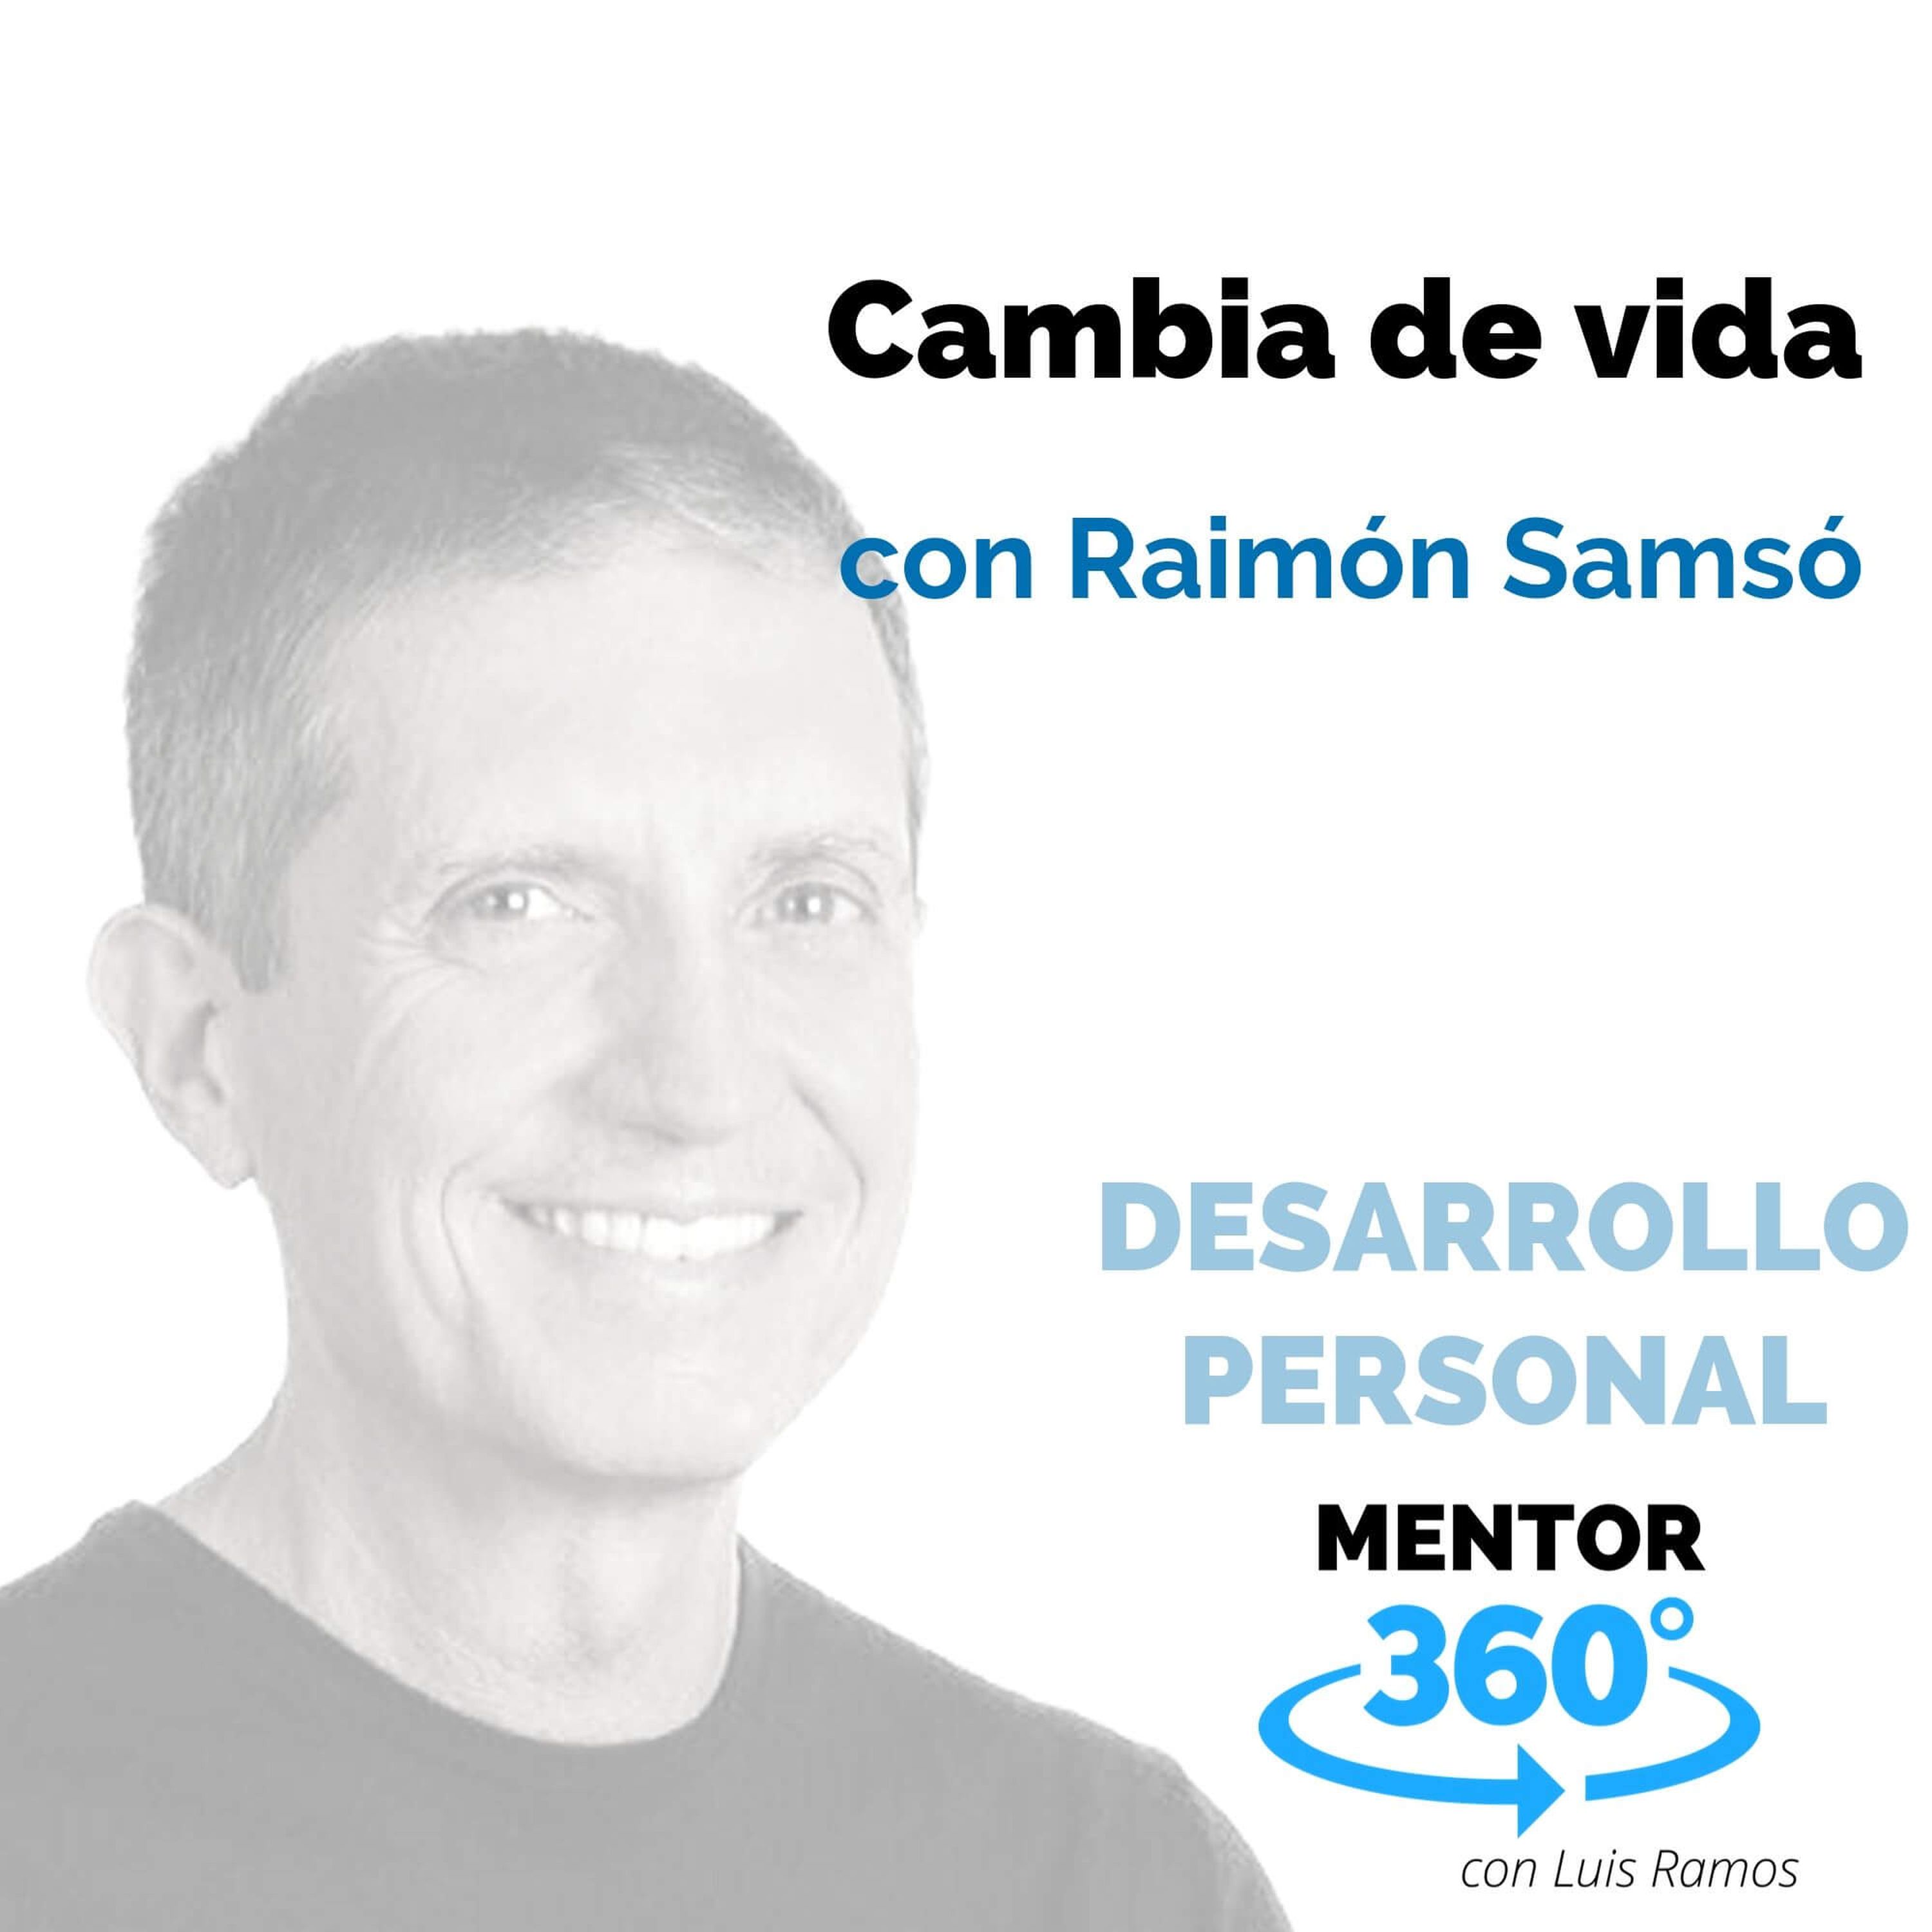 Cambia de vida, con Raimón Samsó - DESARROLLO PERSONAL